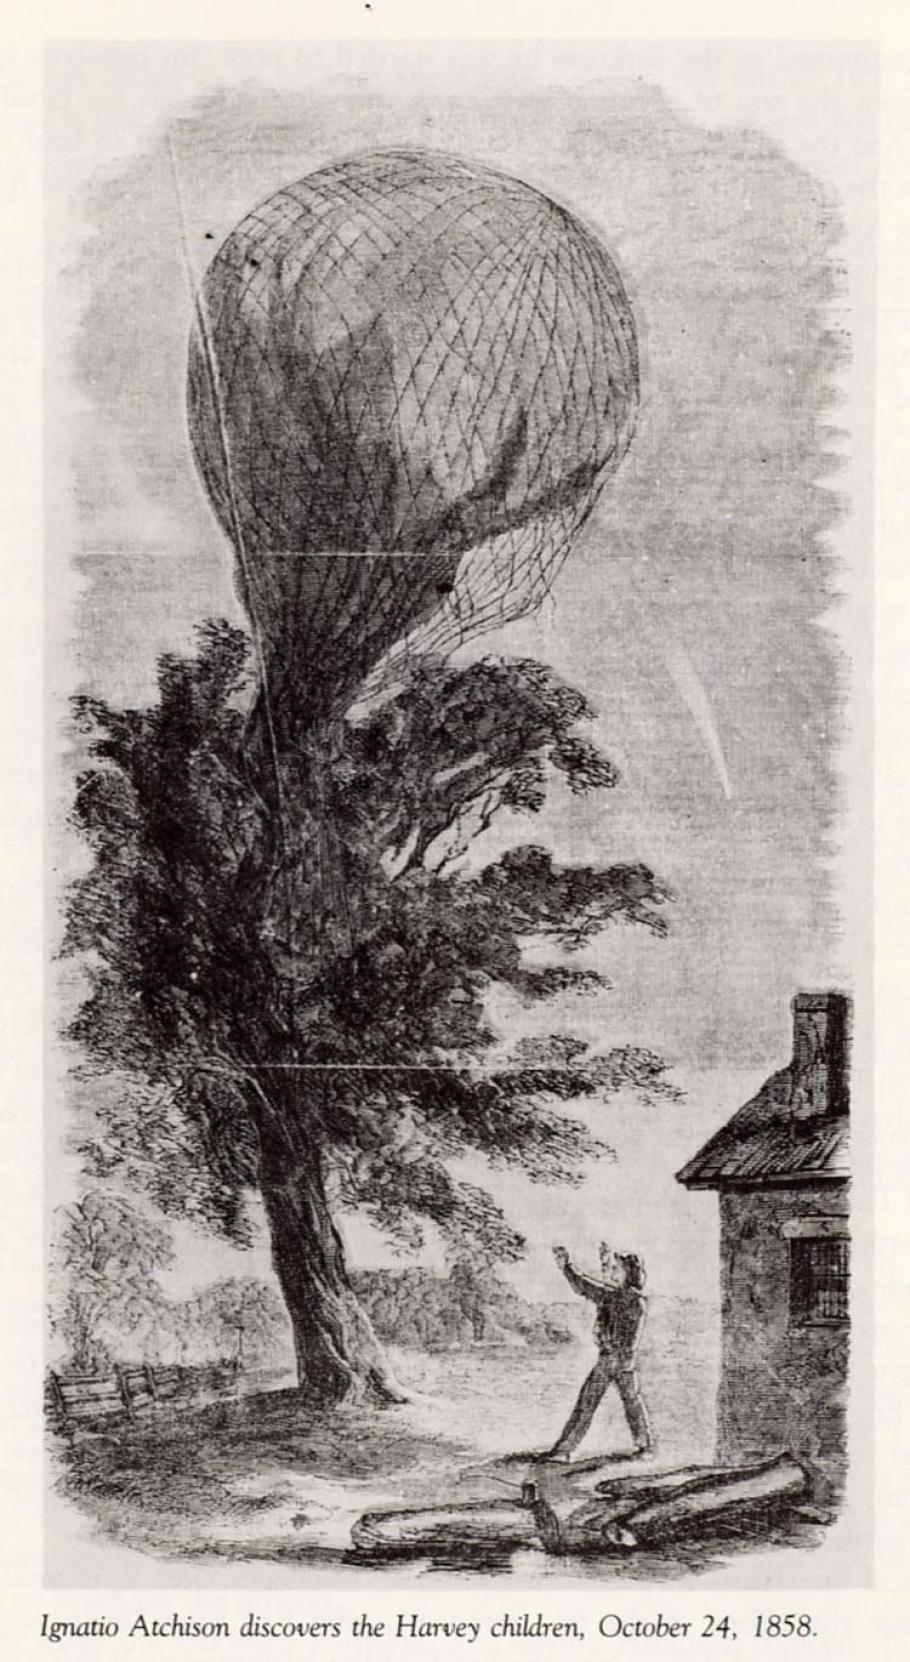 Ignatio Atchison Discovers Harvey Children in Runaway Balloon, Oct 24, 1858